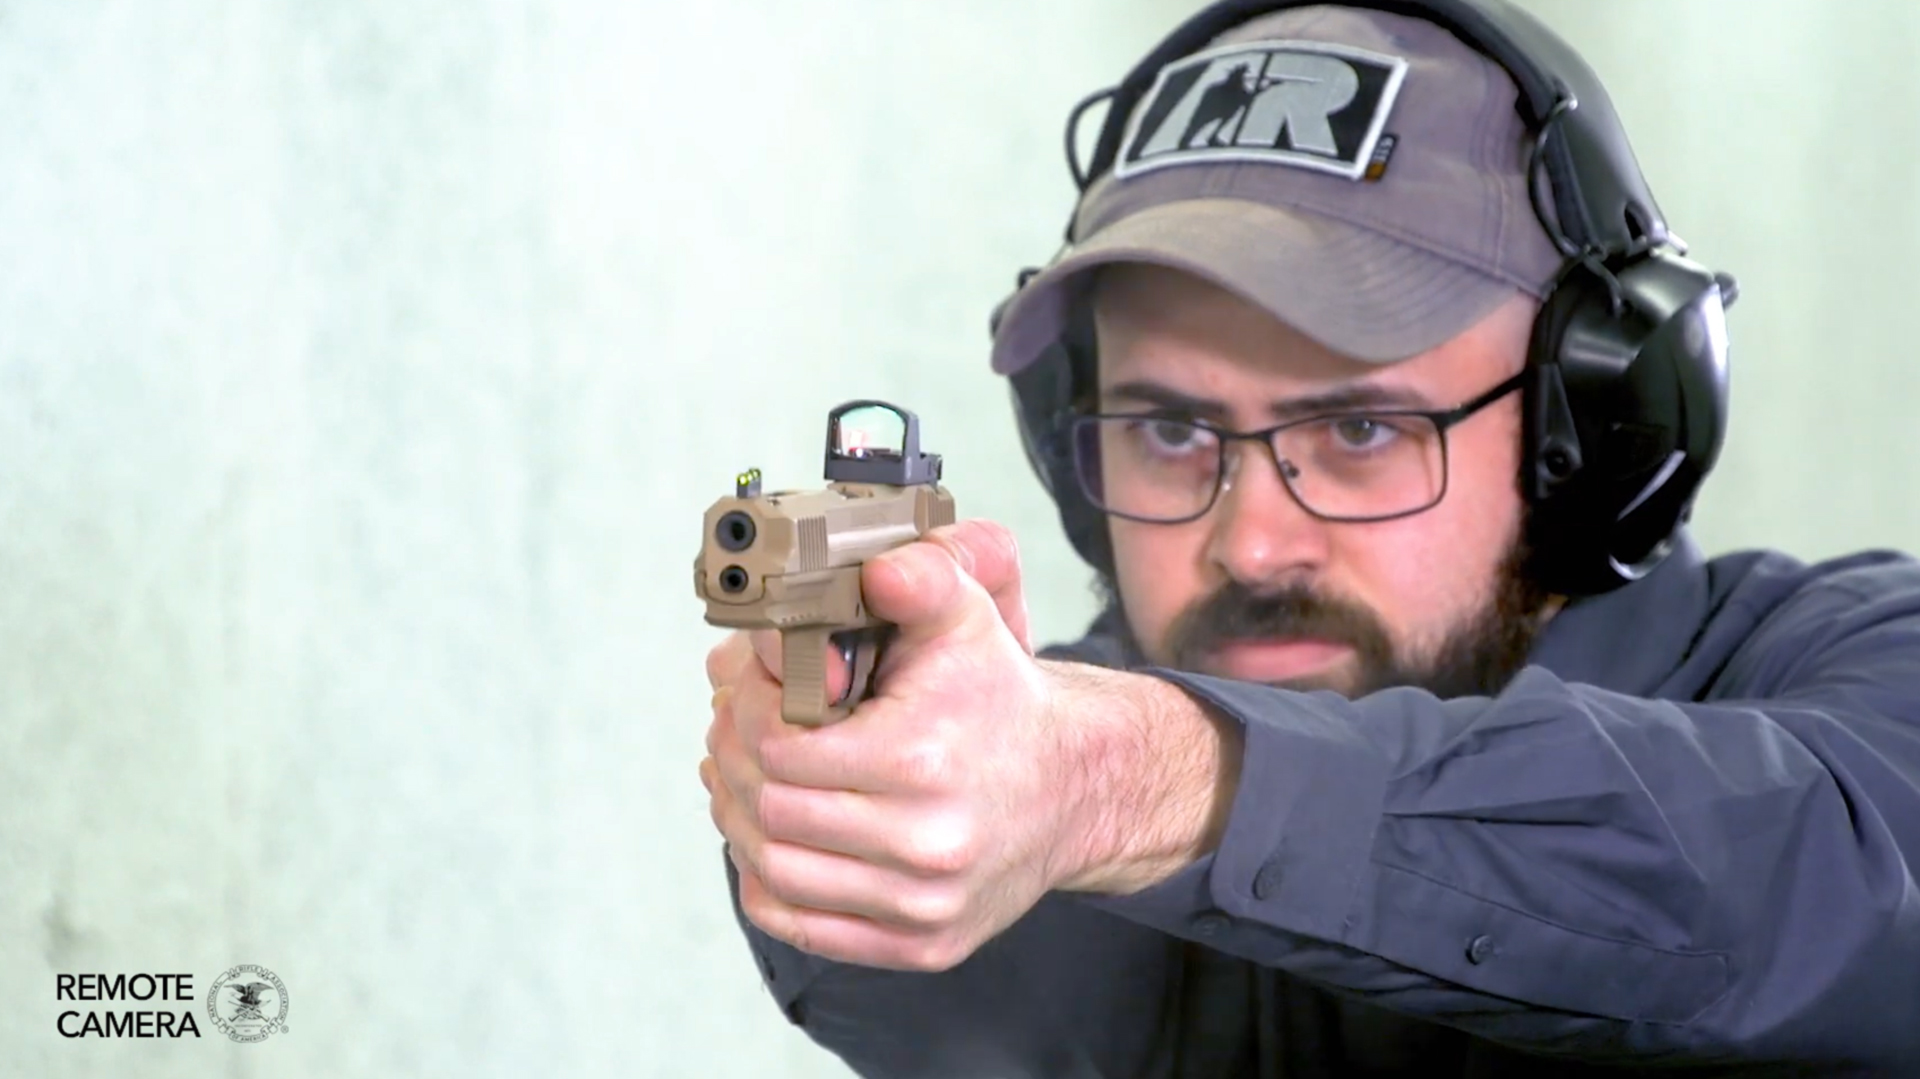 Man wearing protective gear shooting brown Ruger pistol indoors